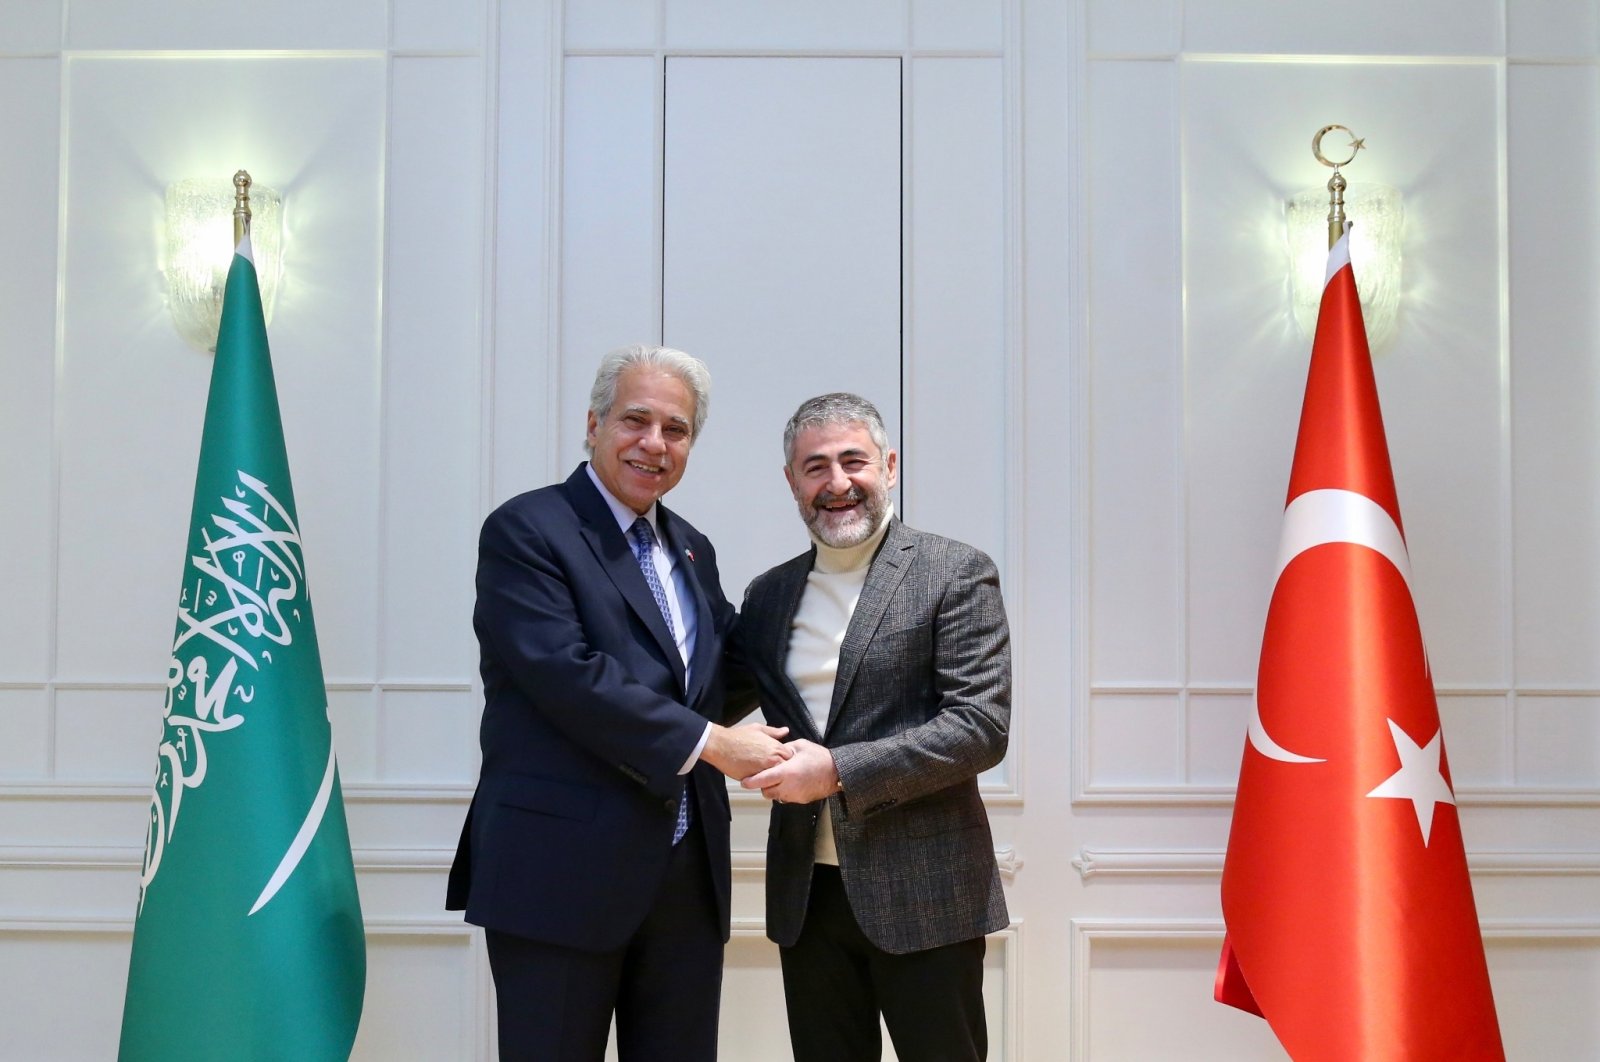 Türkiye’s Treasury and Finance Minister Nureddin Nebati (R) shakes hands with Saudi Arabian Trade Minister Majid bin Abdullah Al Qasabi (L), Istanbul, Türkiye, Nov. 27, 2022. (Photo: @NureddinNebati)